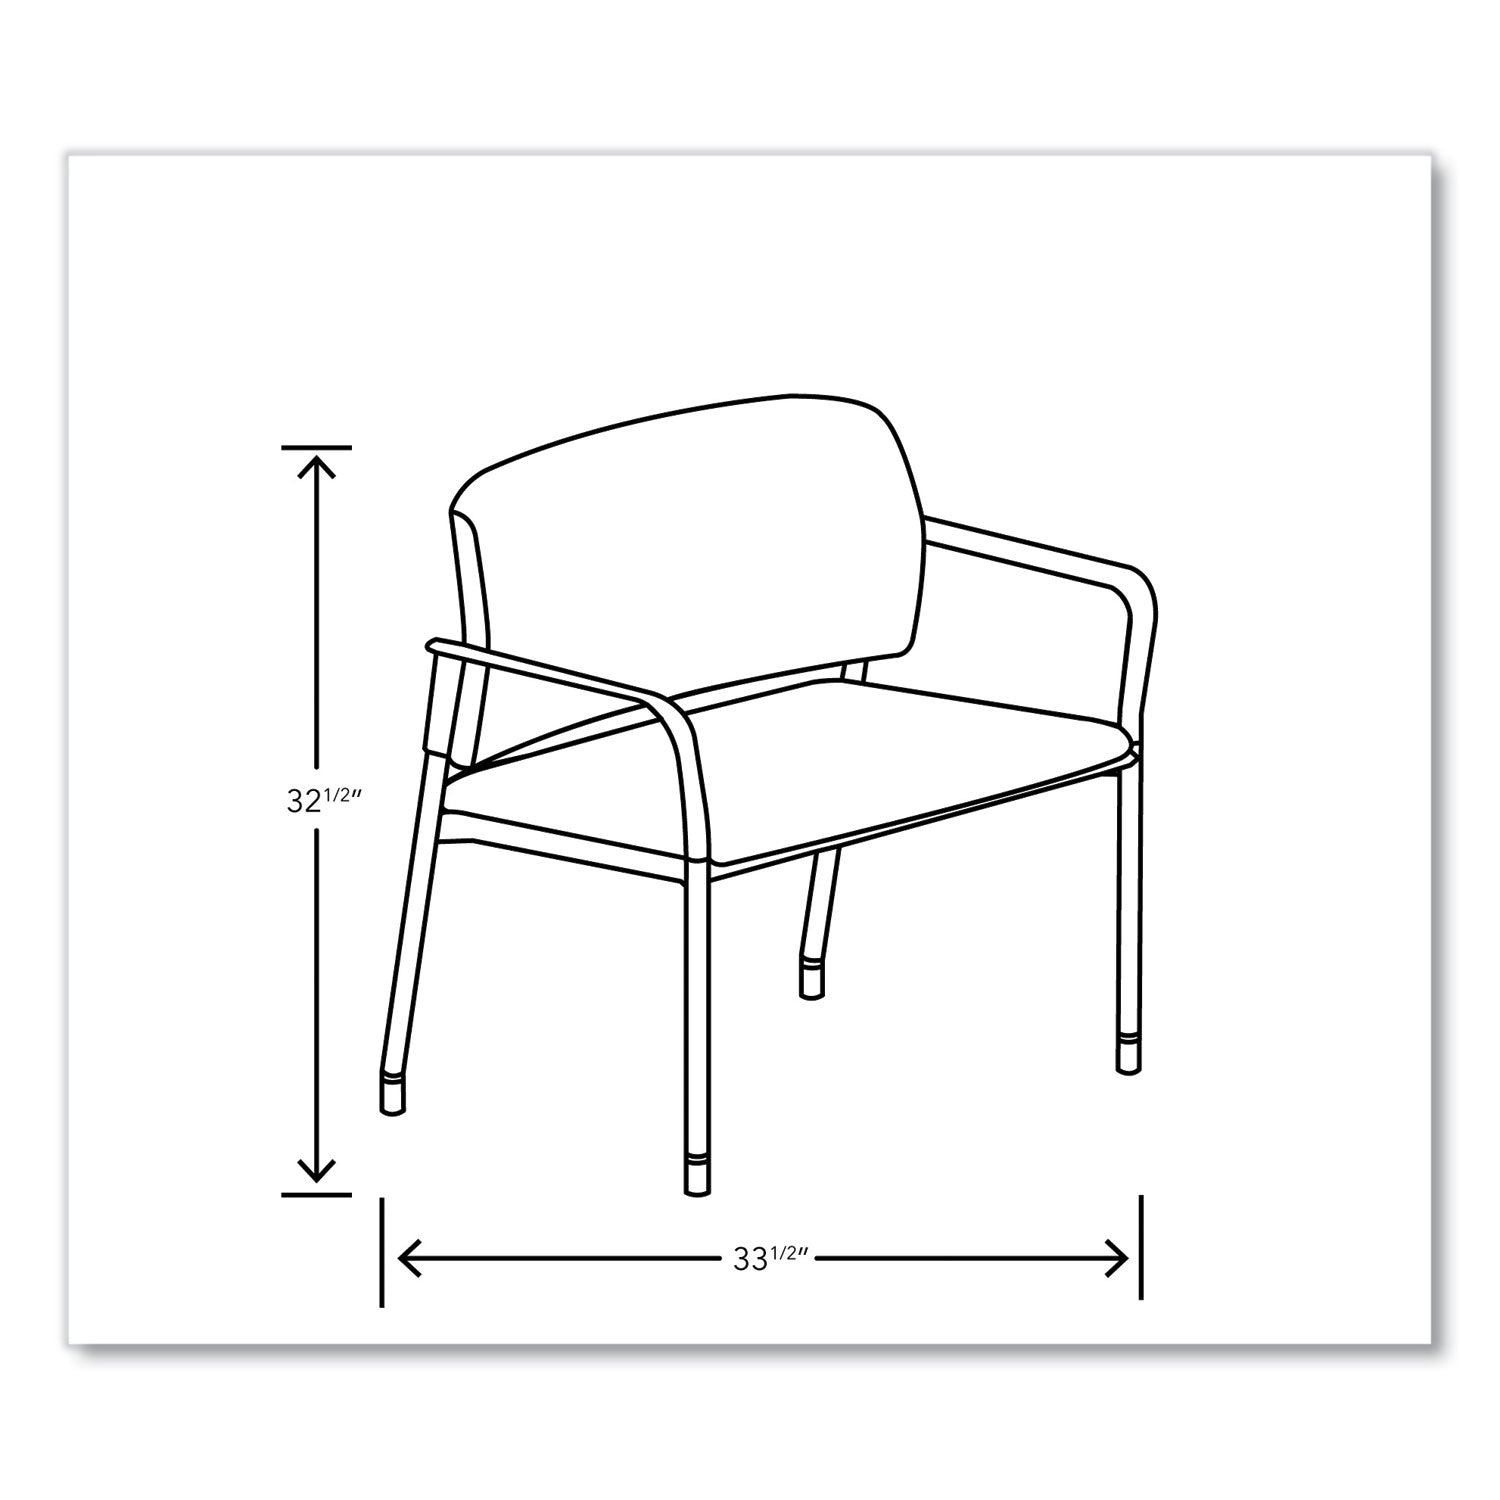 accommodate-series-bariatric-chair-with-arms-335-x-215-x-325-flint-seat-flint-back-charblack-legs_honsb50fesx39cb - 3